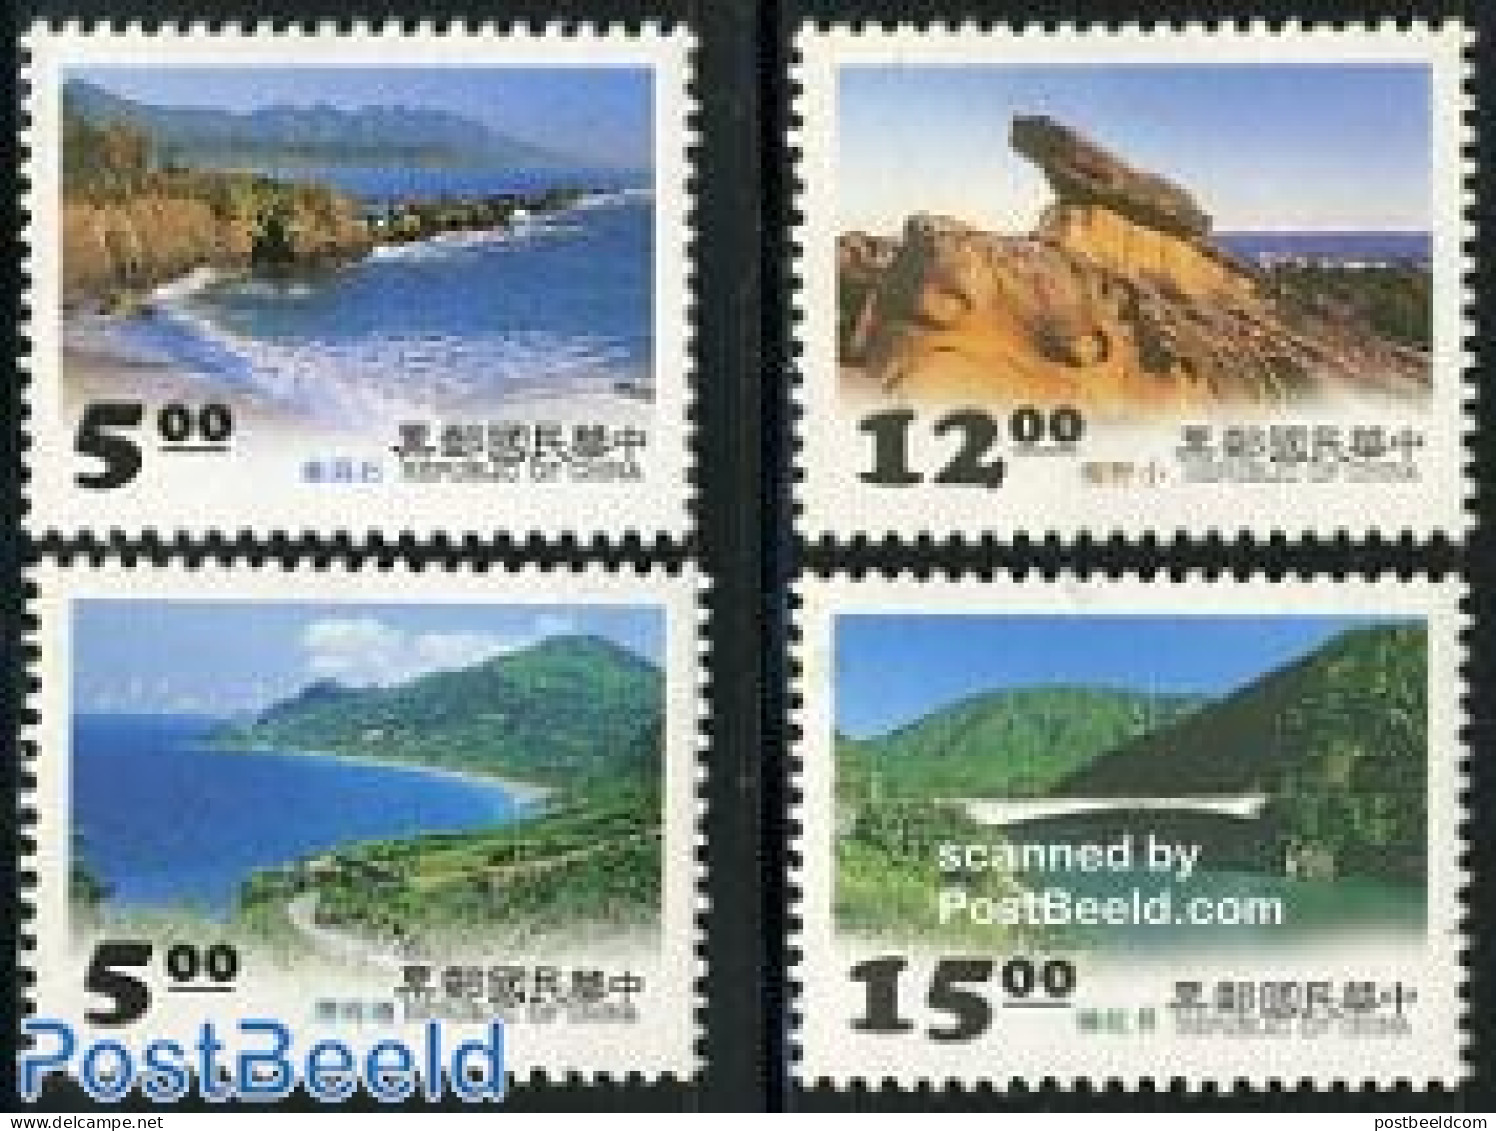 Taiwan 1995 Landscapes 4v, Mint NH, Art - Bridges And Tunnels - Ponts